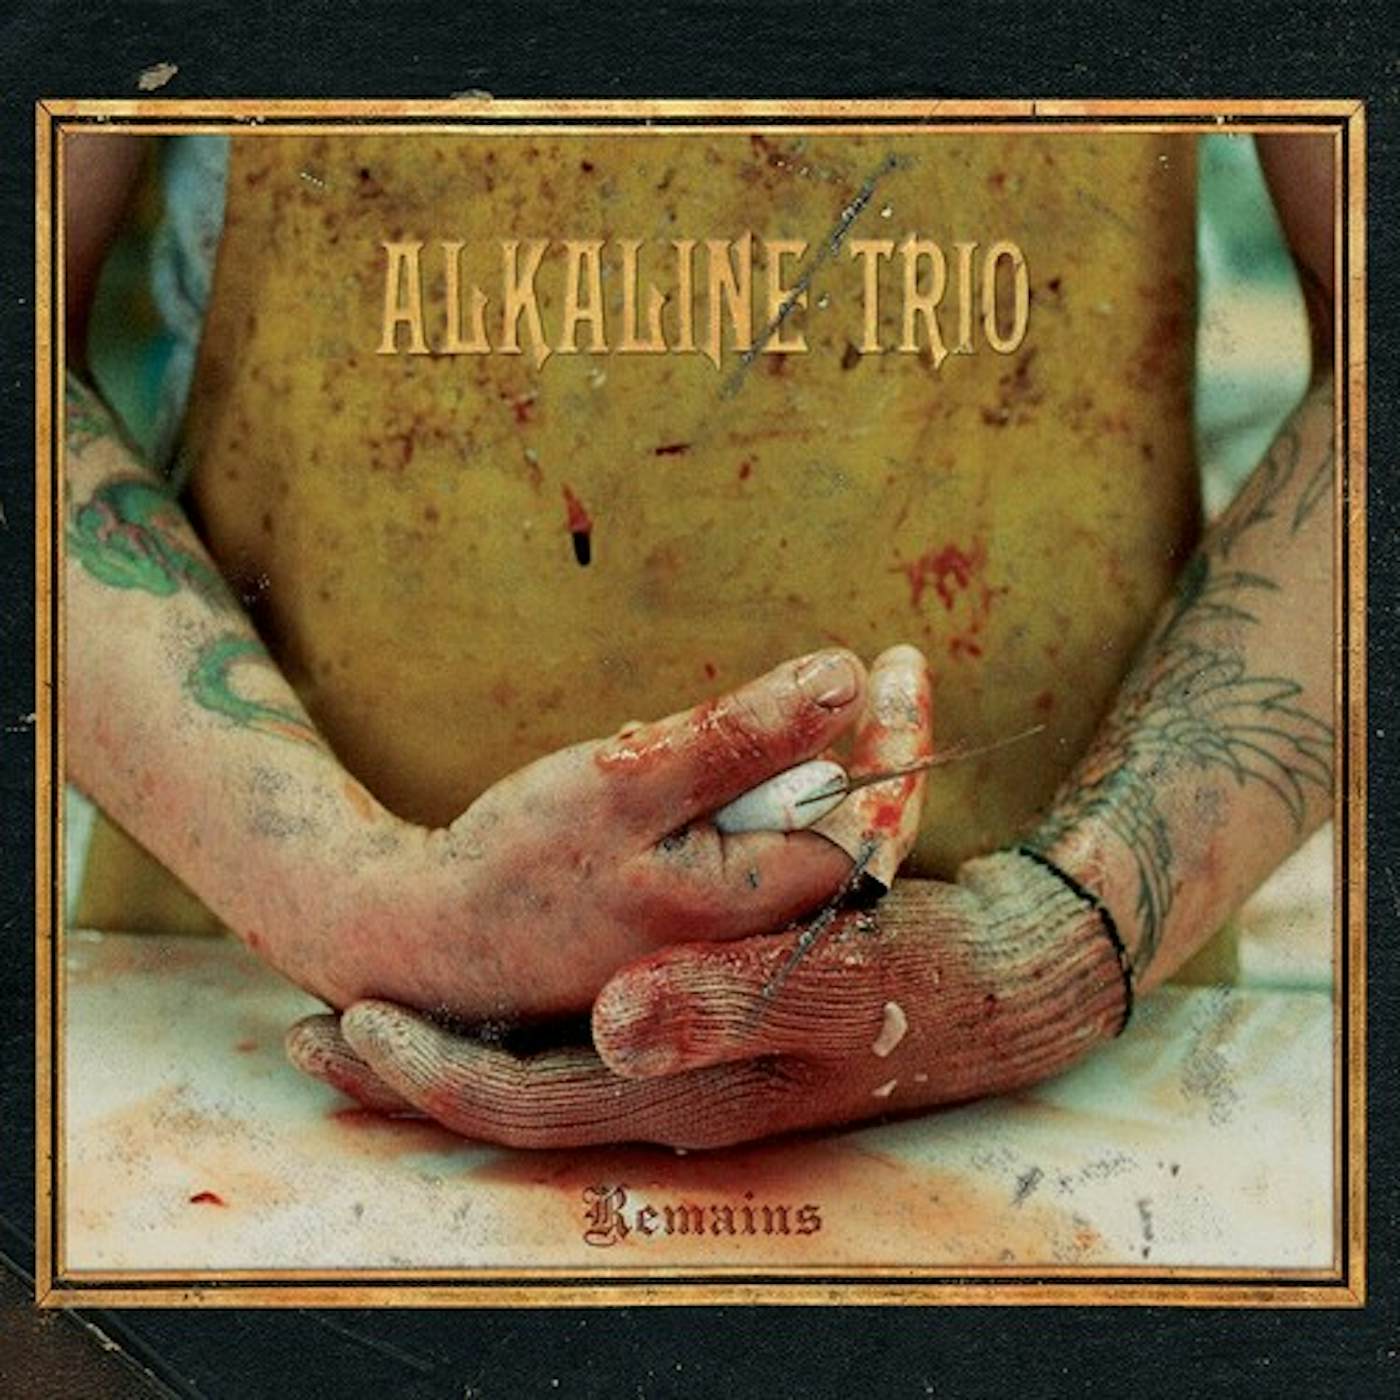 Alkaline Trio Remains Vinyl Record